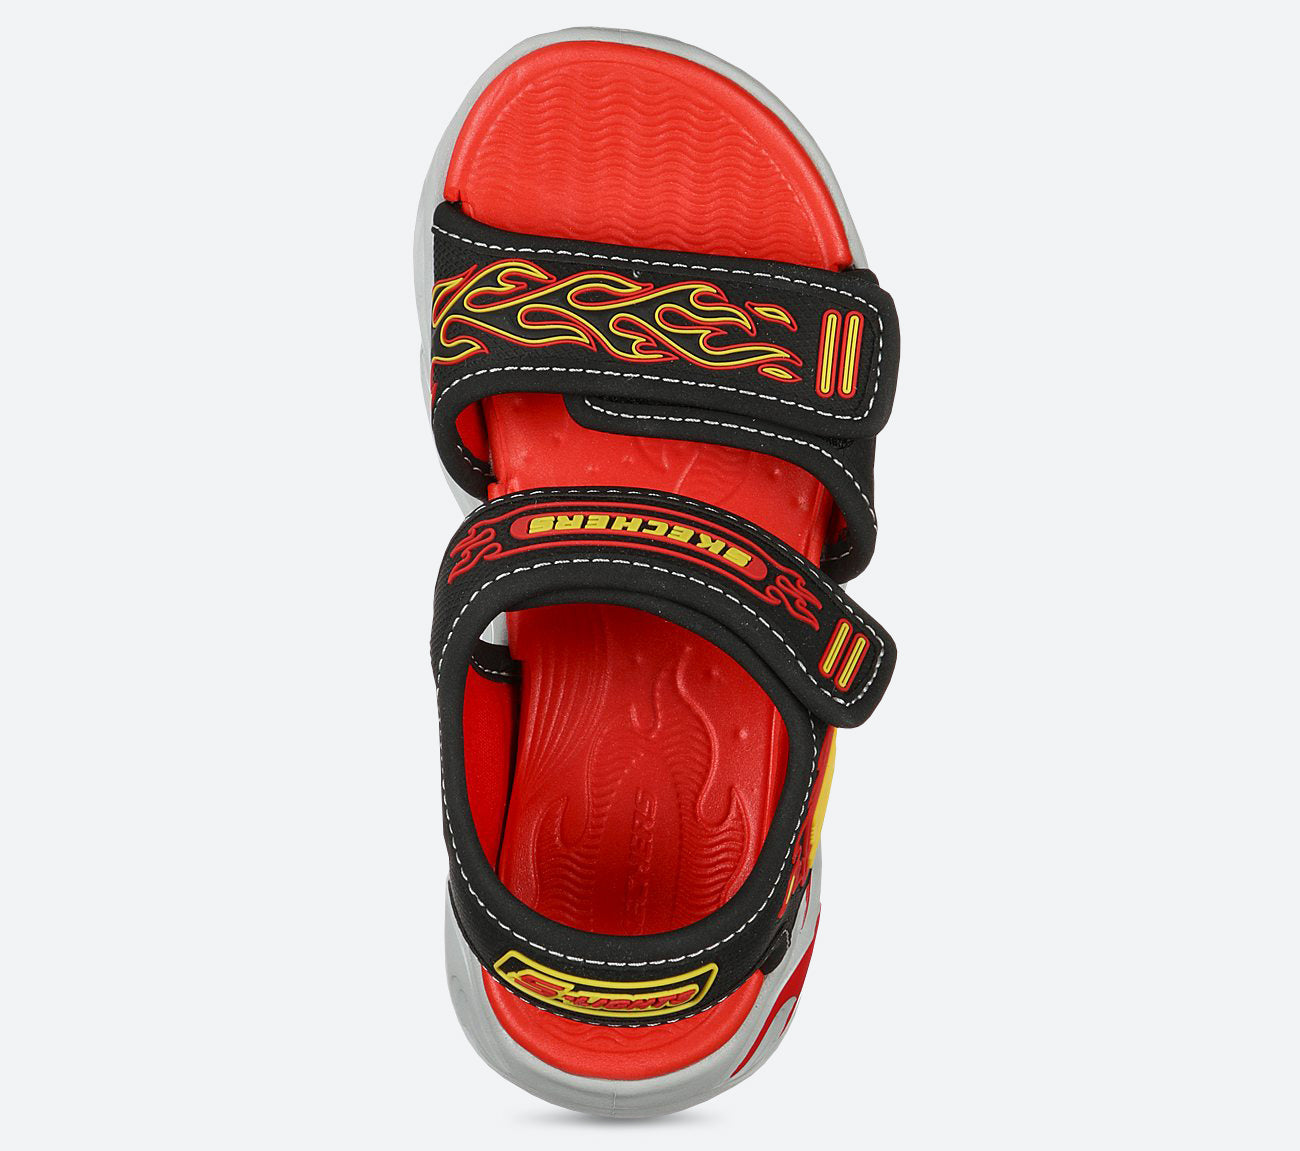 S Lights: Thermo Splash - Heat Flo Sandal Skechers